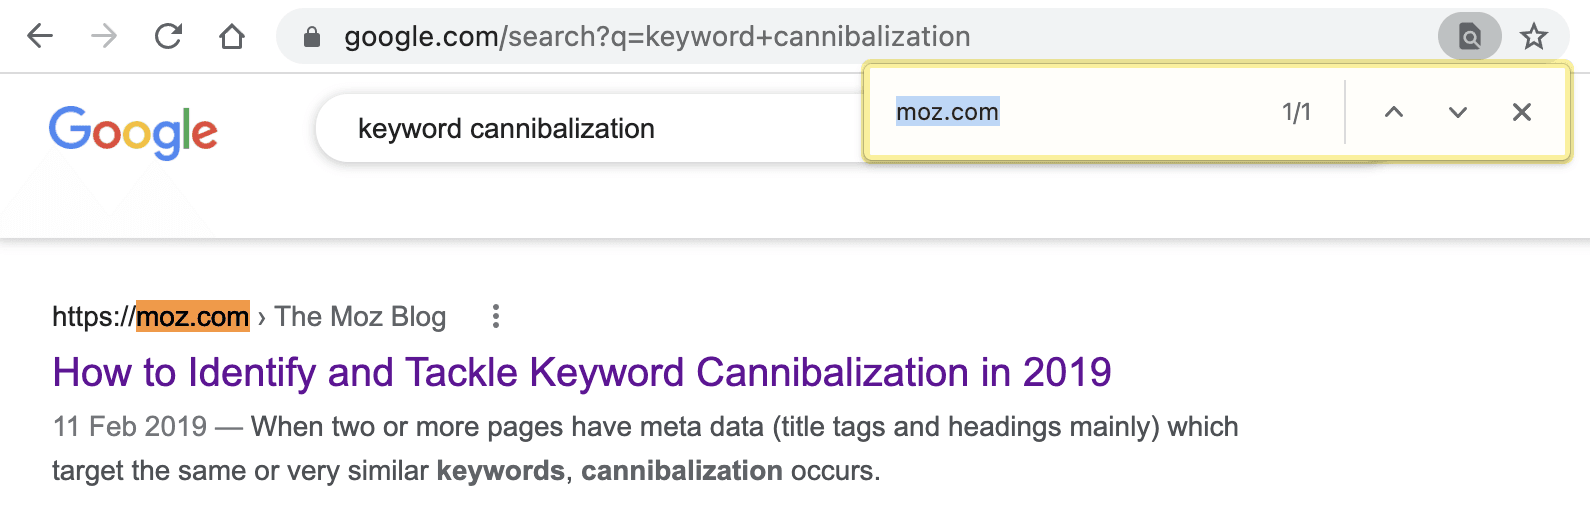 moz-keyword-cannibalization.png